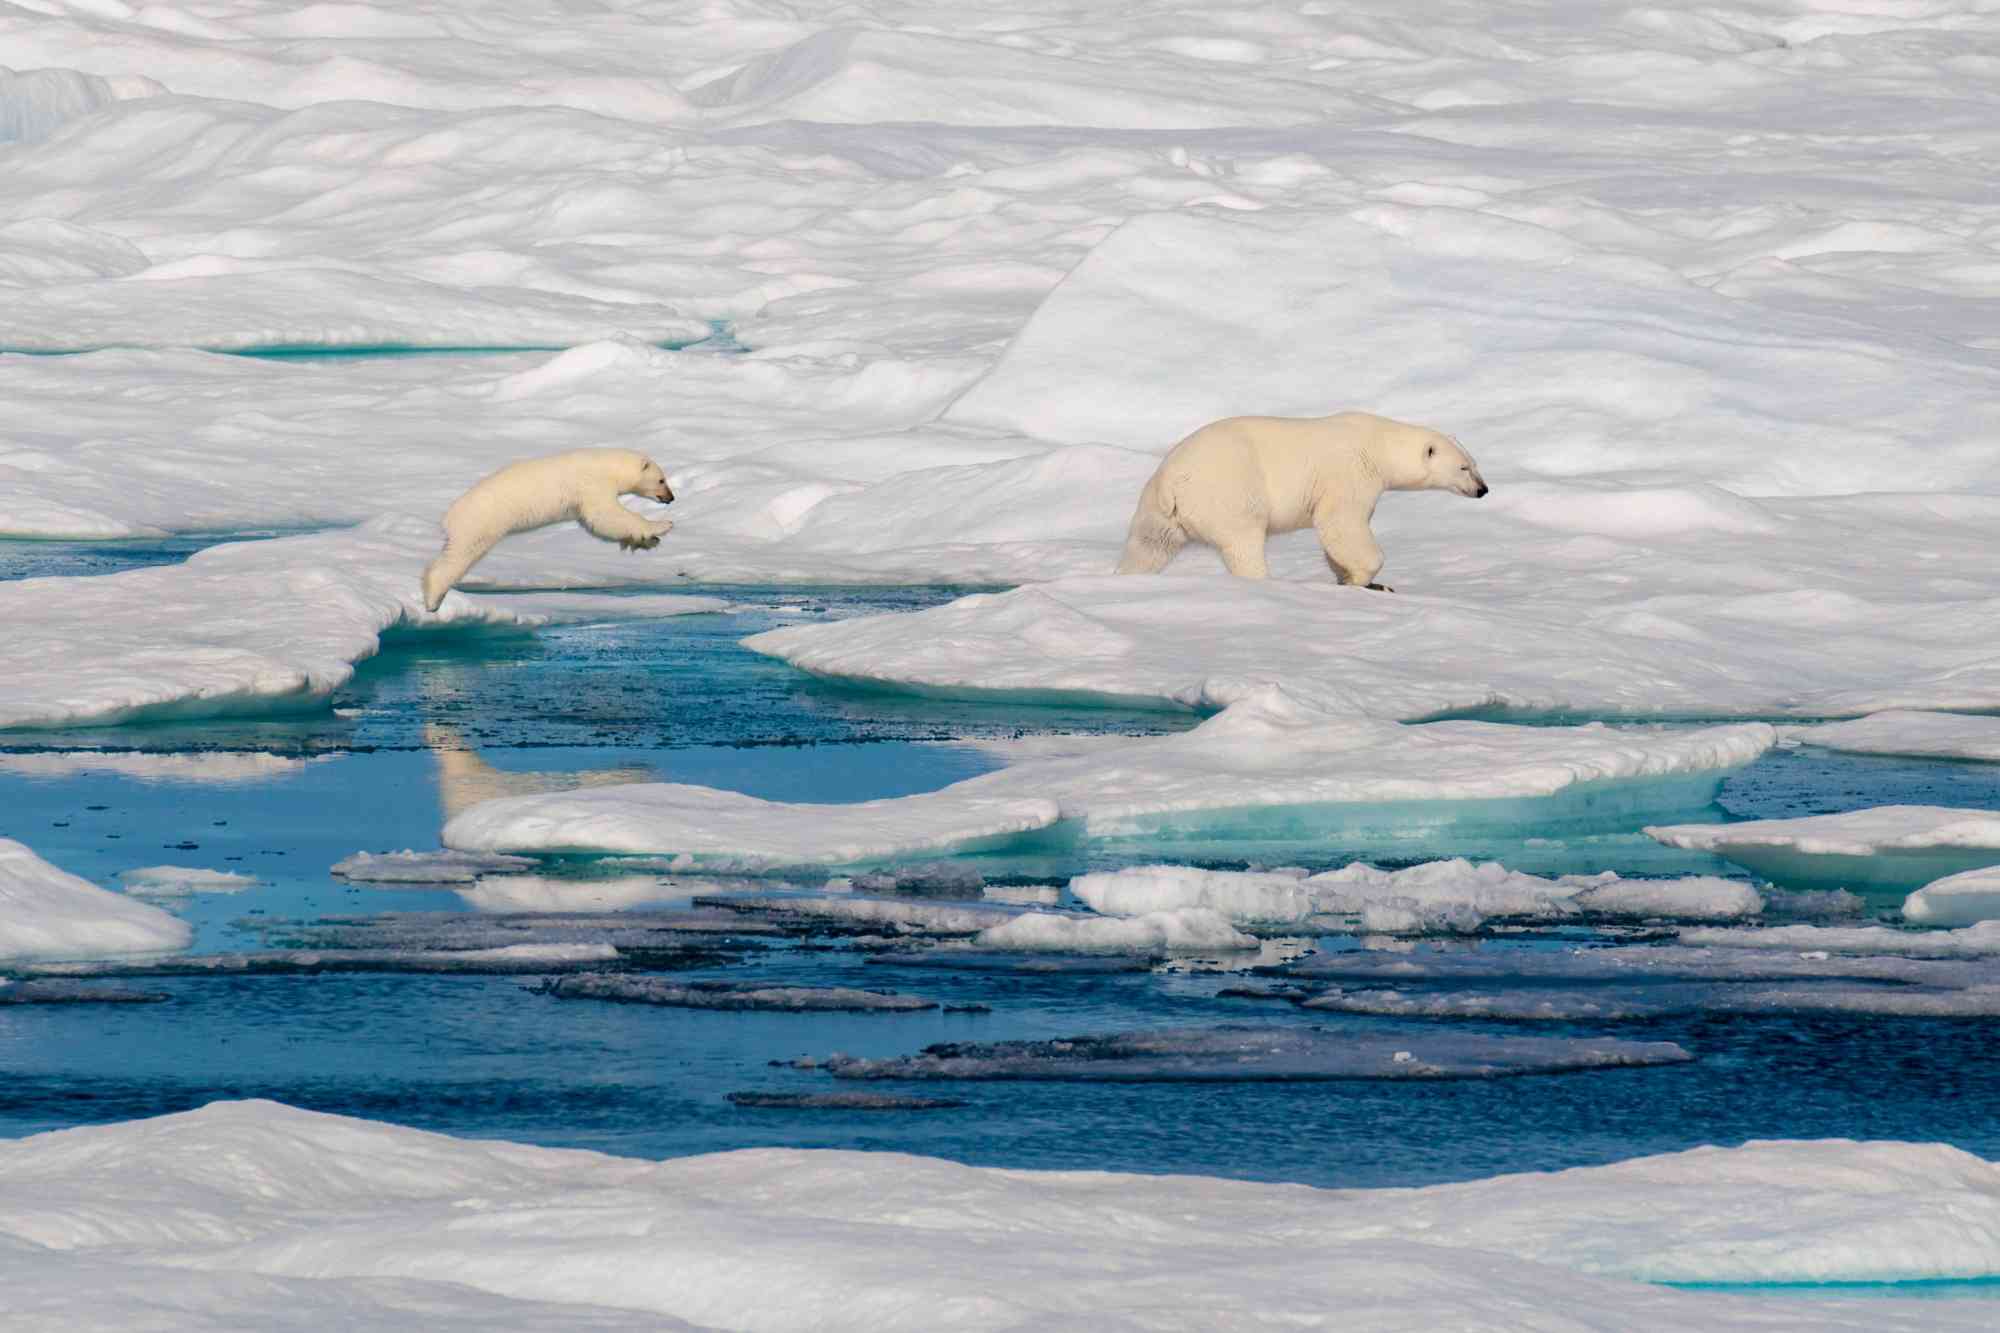 2015.08.04 - Polar Bears Crossing an Ice Field - Canada - Donna Kramer